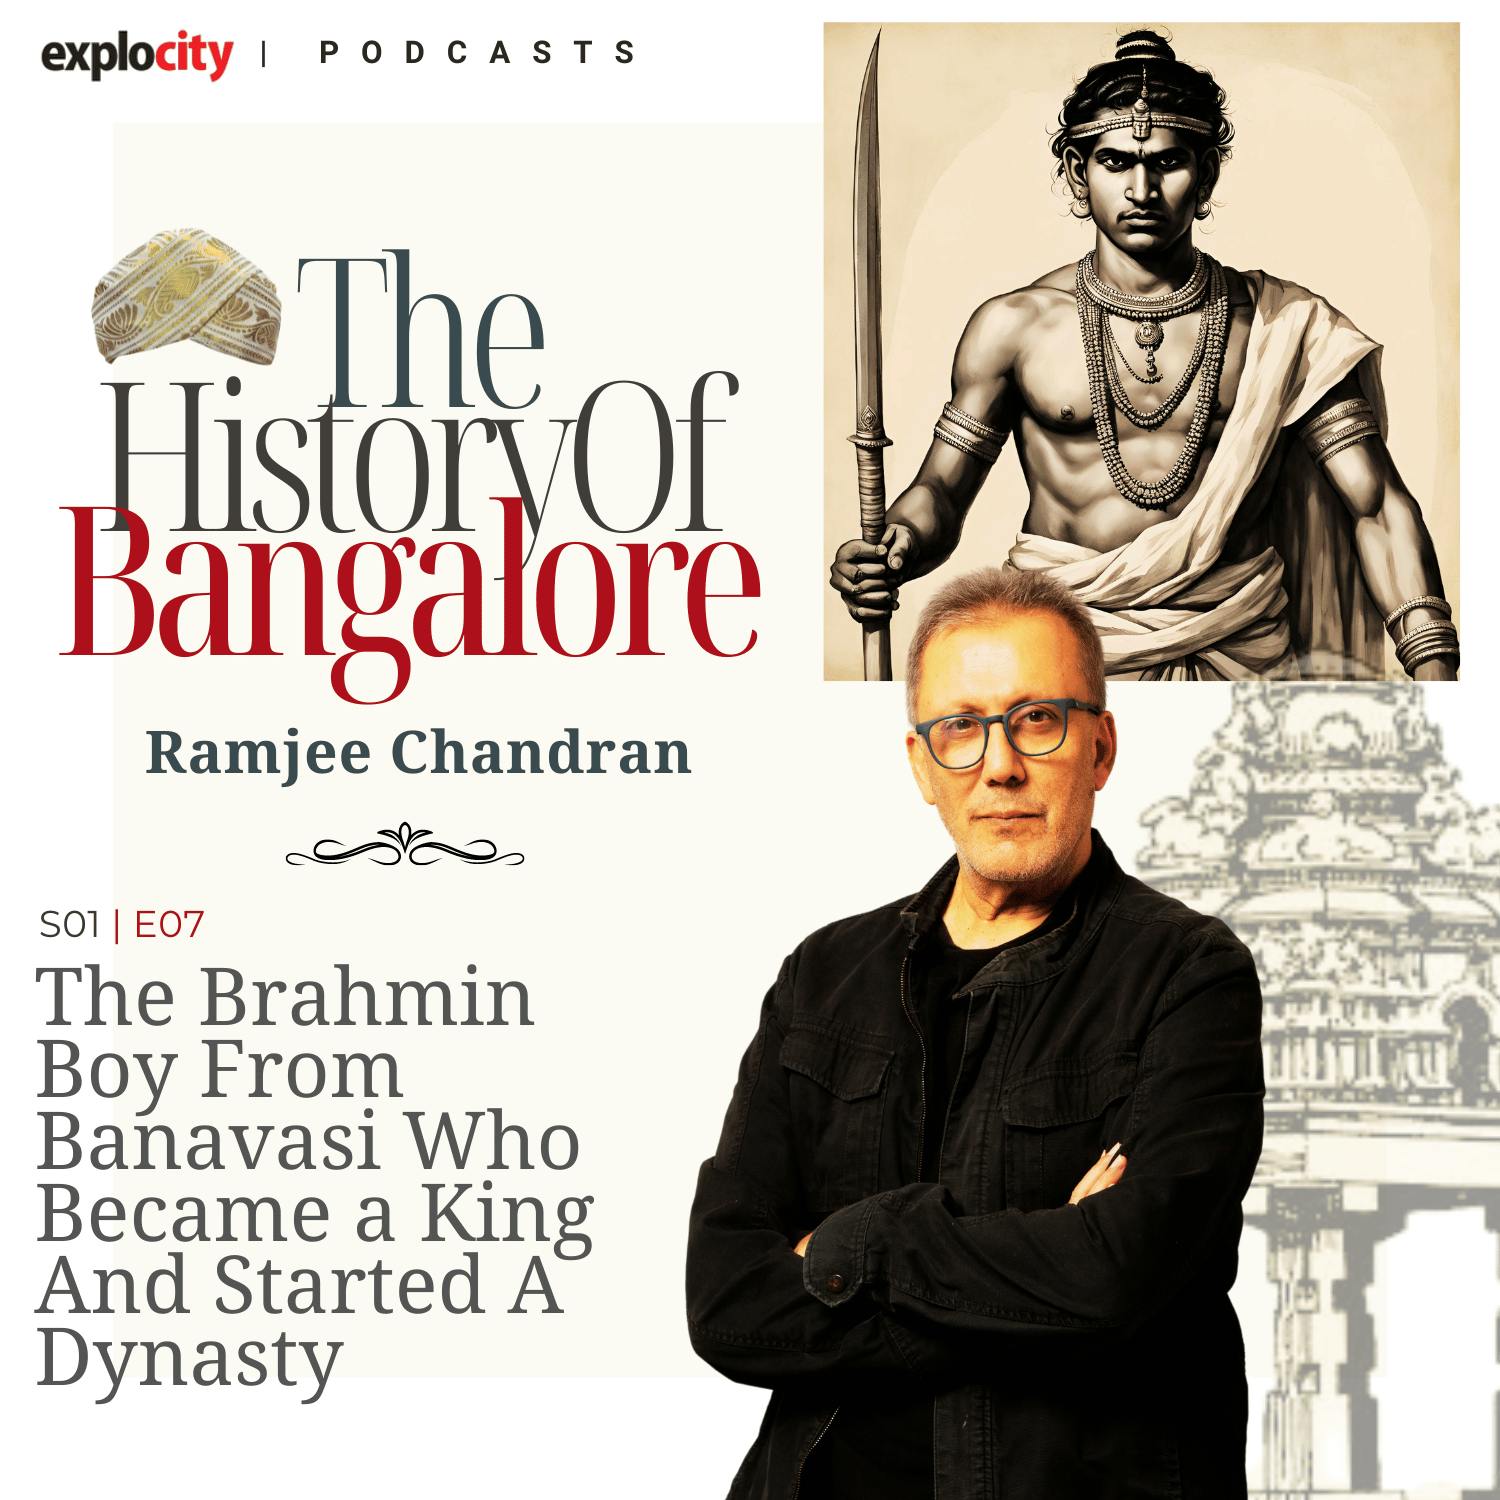 Kadamba Dynasty 350-540 AD: The Brahmin Boy From Banavasi Who Became a King